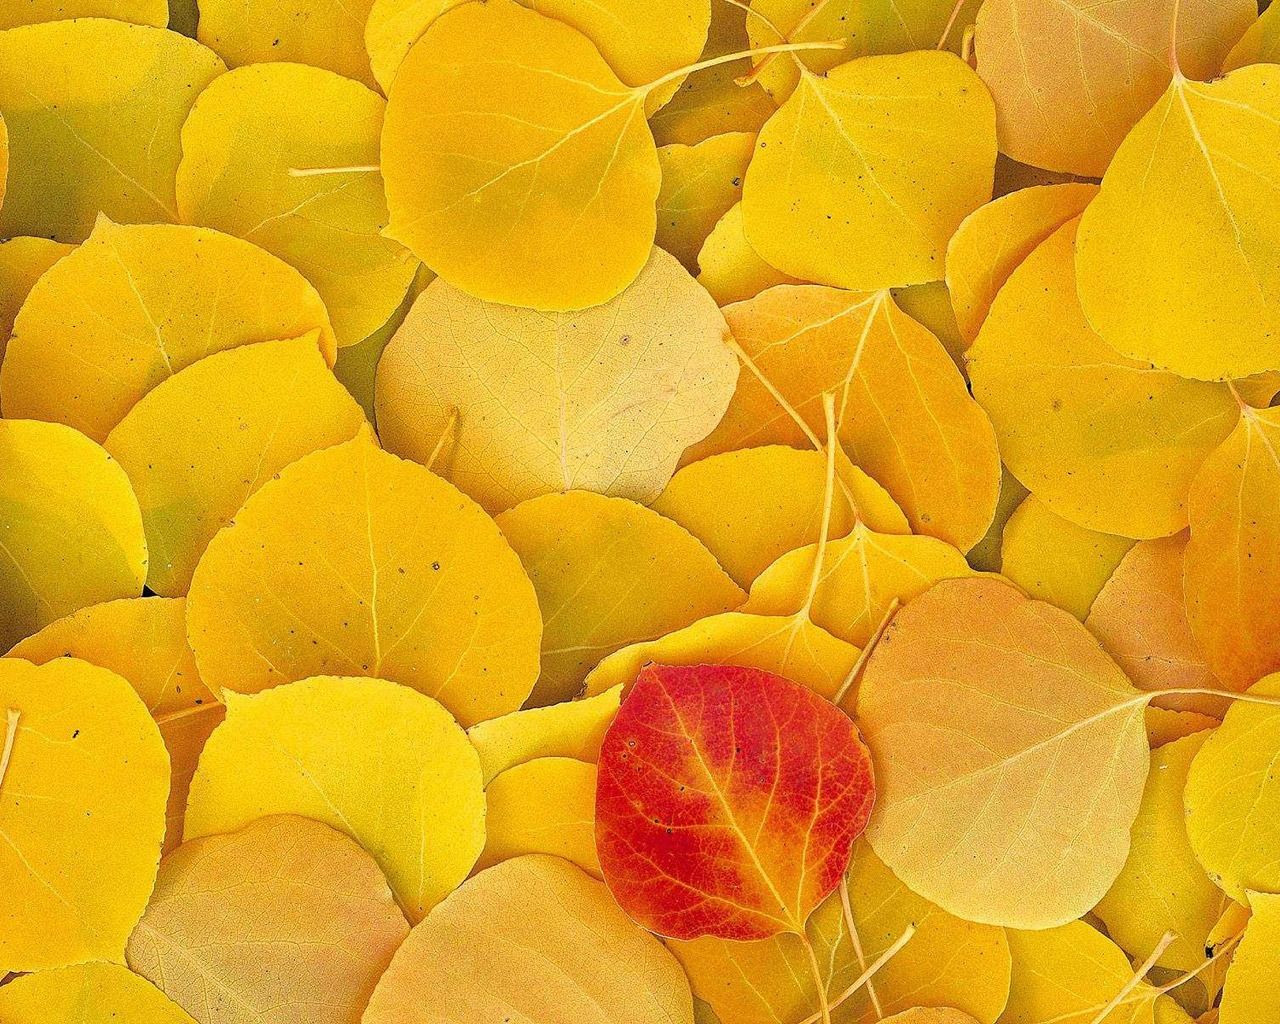 Aspen Leaves Wallpaper Autumn Nature Wallpaper in jpg format for free download